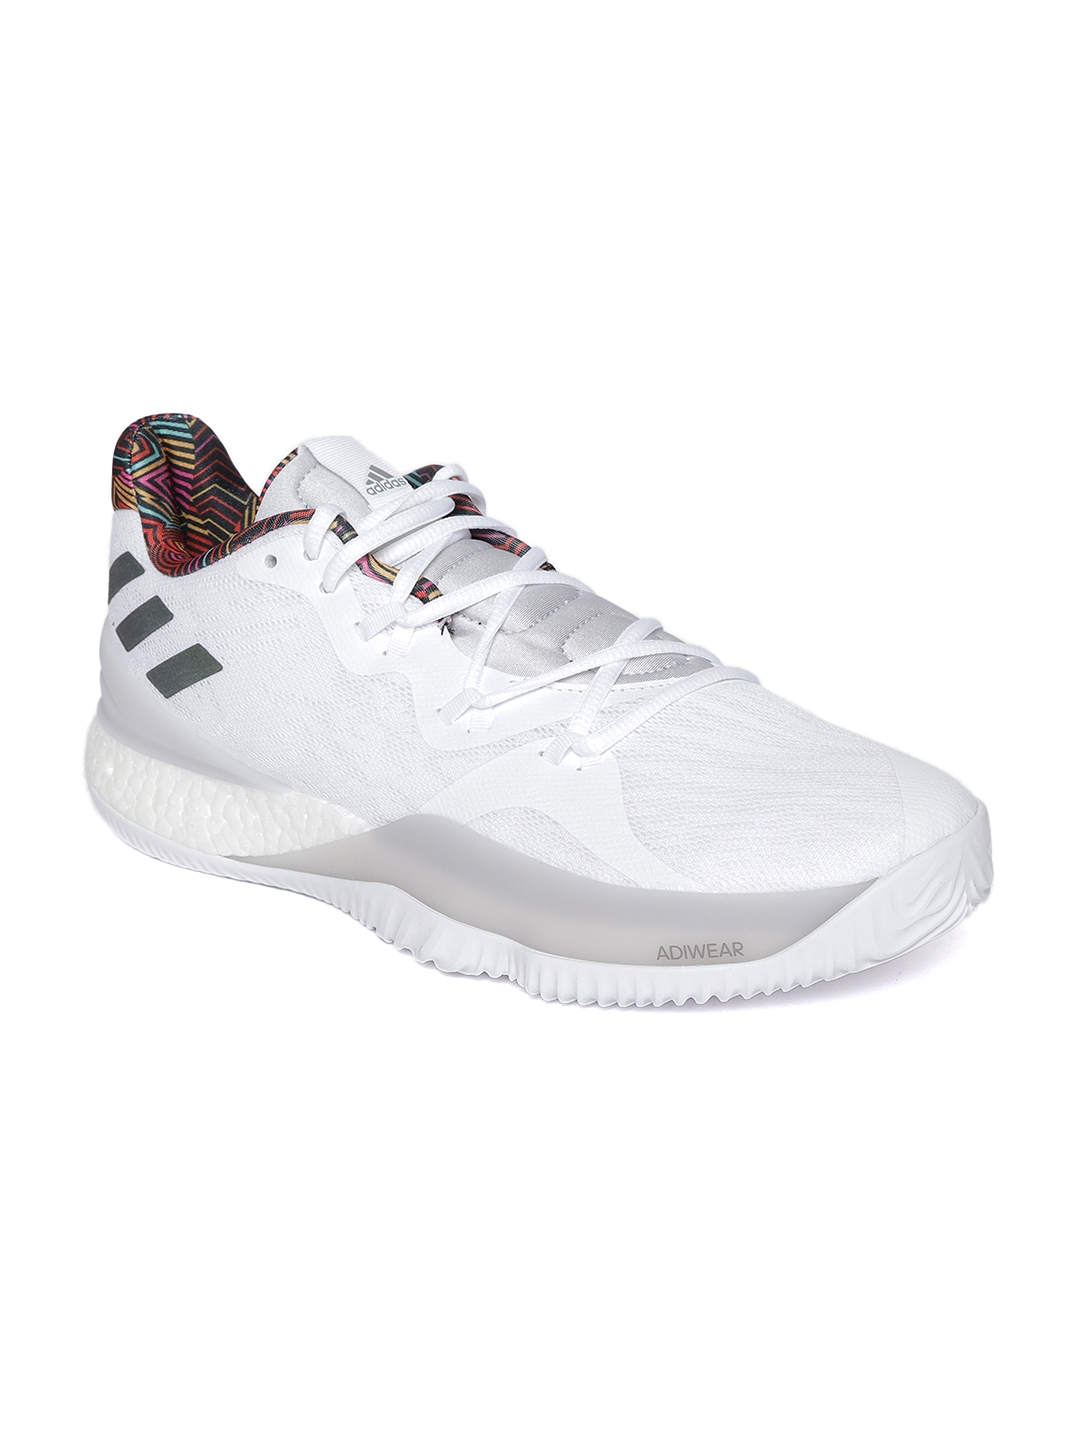 Buy ADIDAS Men White Light 2018 Basketball Shoes - Sports Shoes Men 6841786 | Myntra